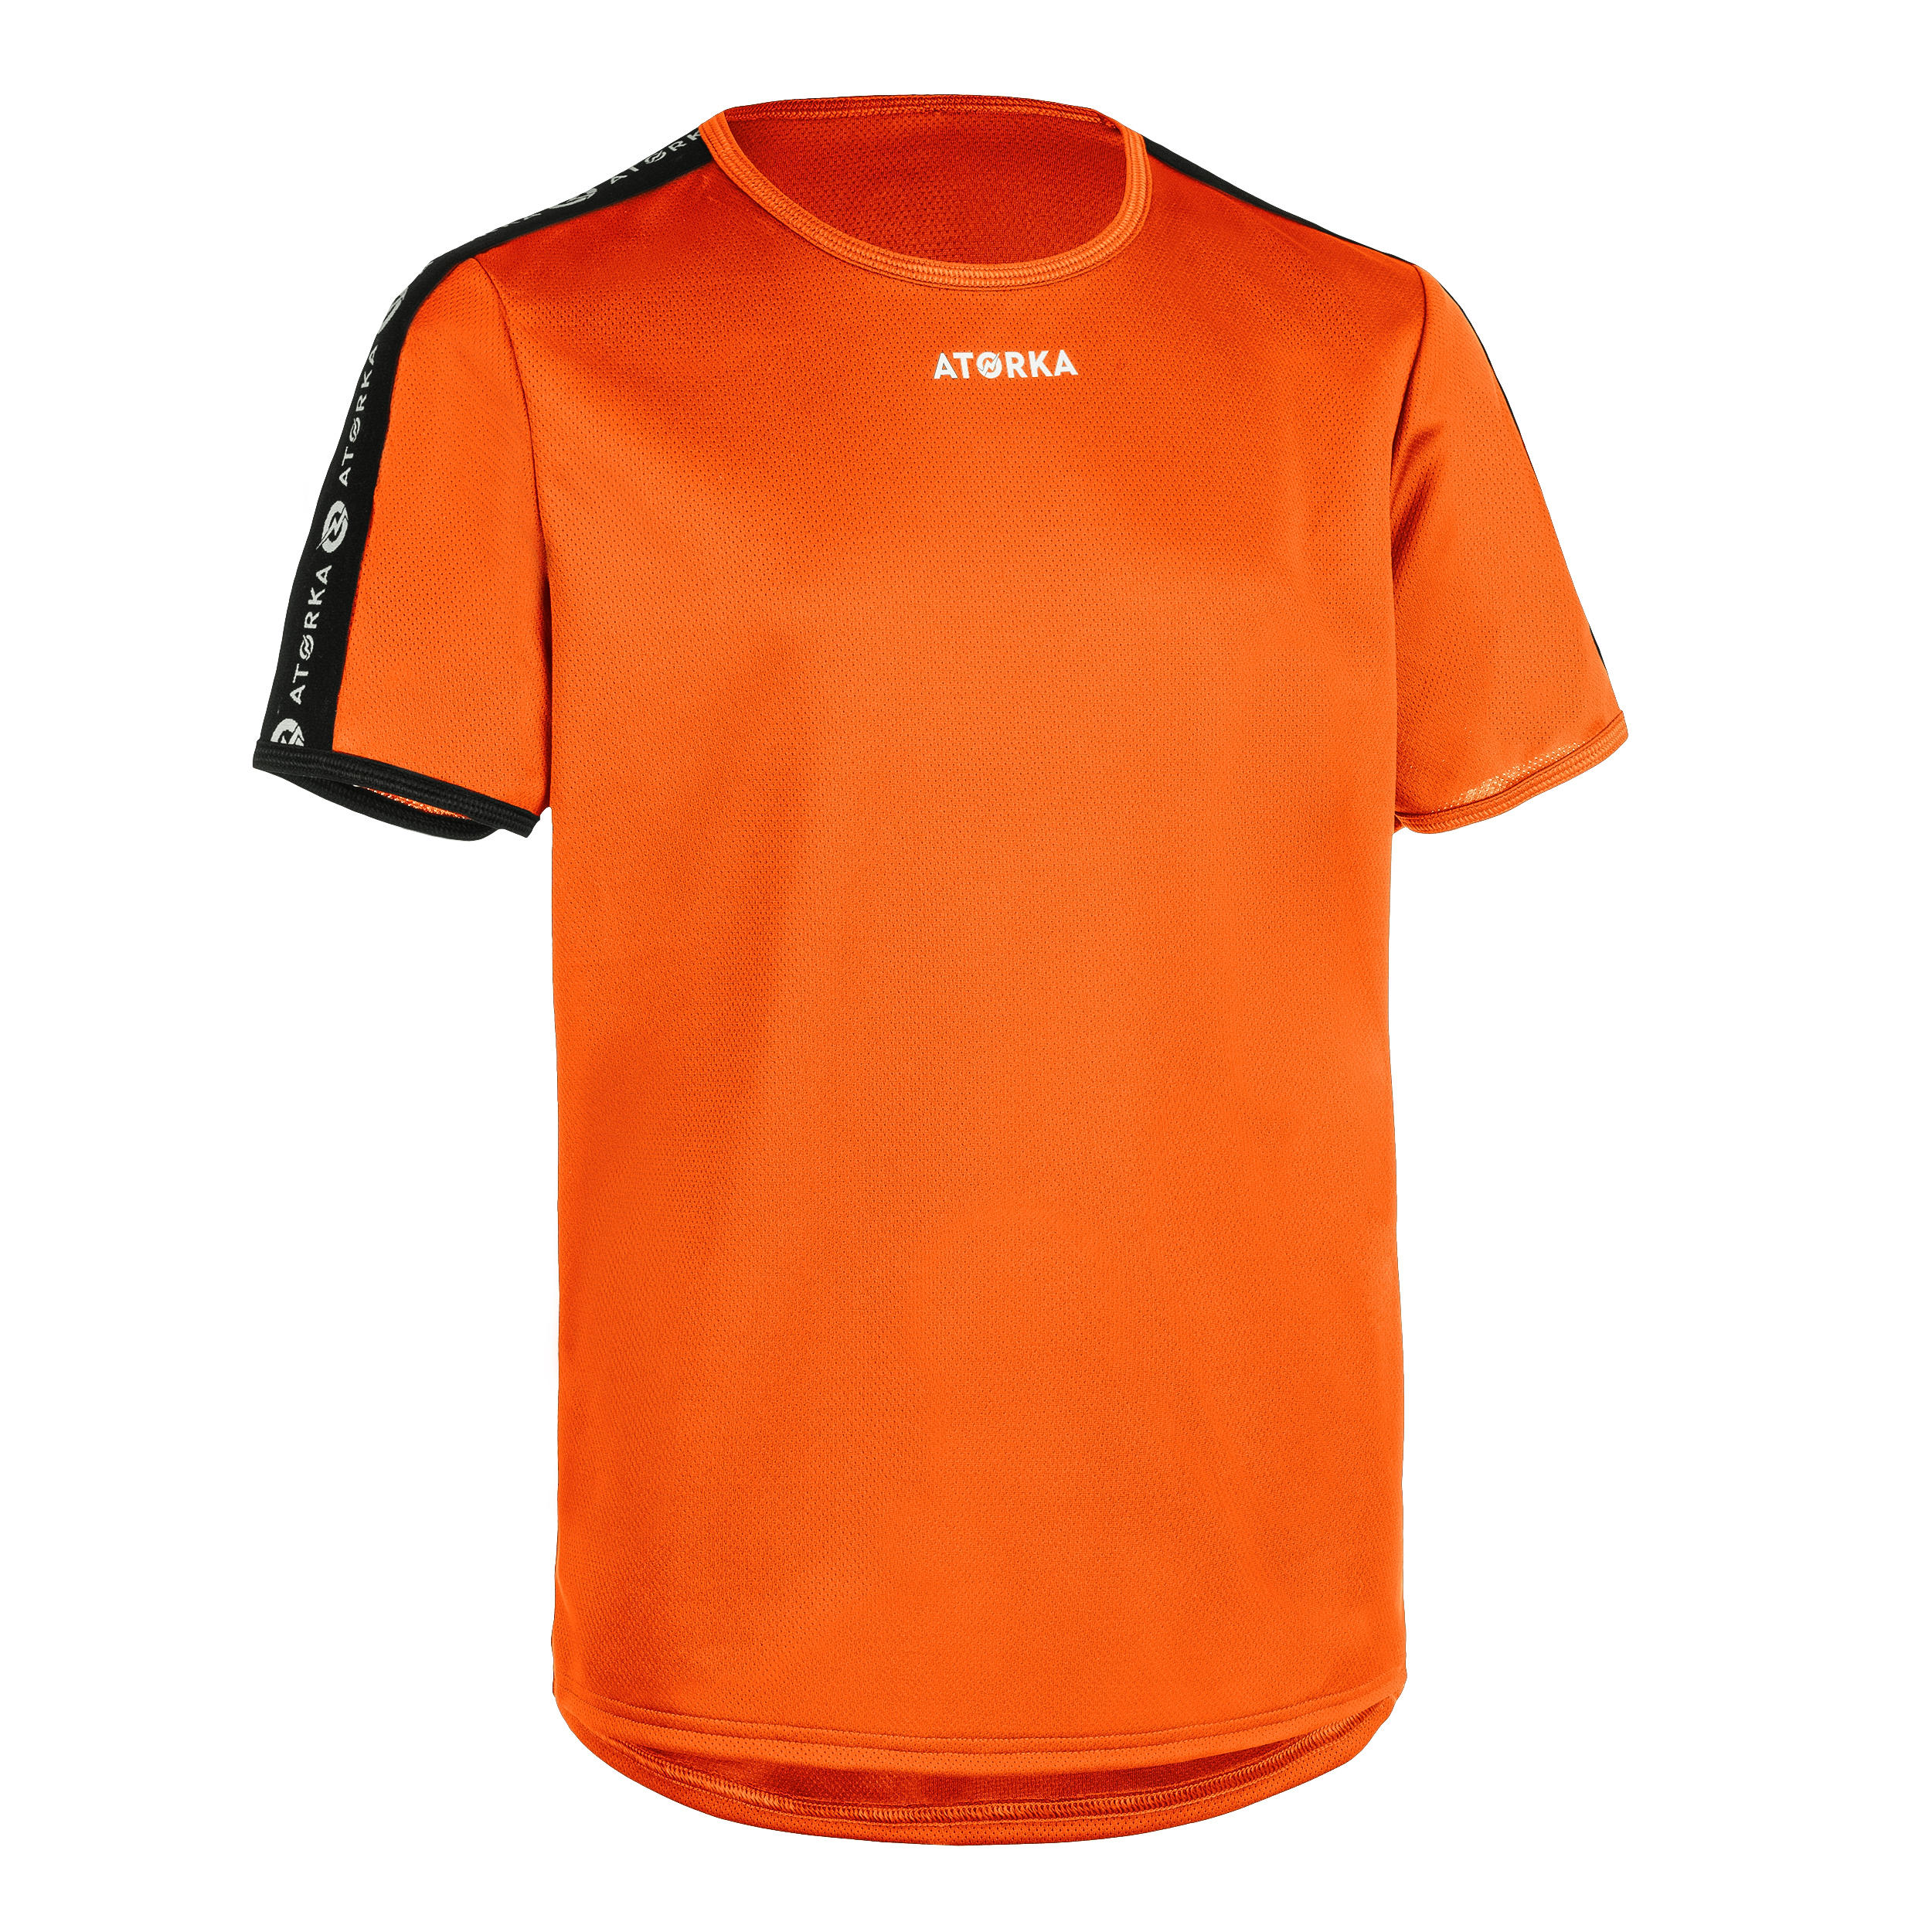 ATORKA Kids' Handball Jersey H100 - Orange